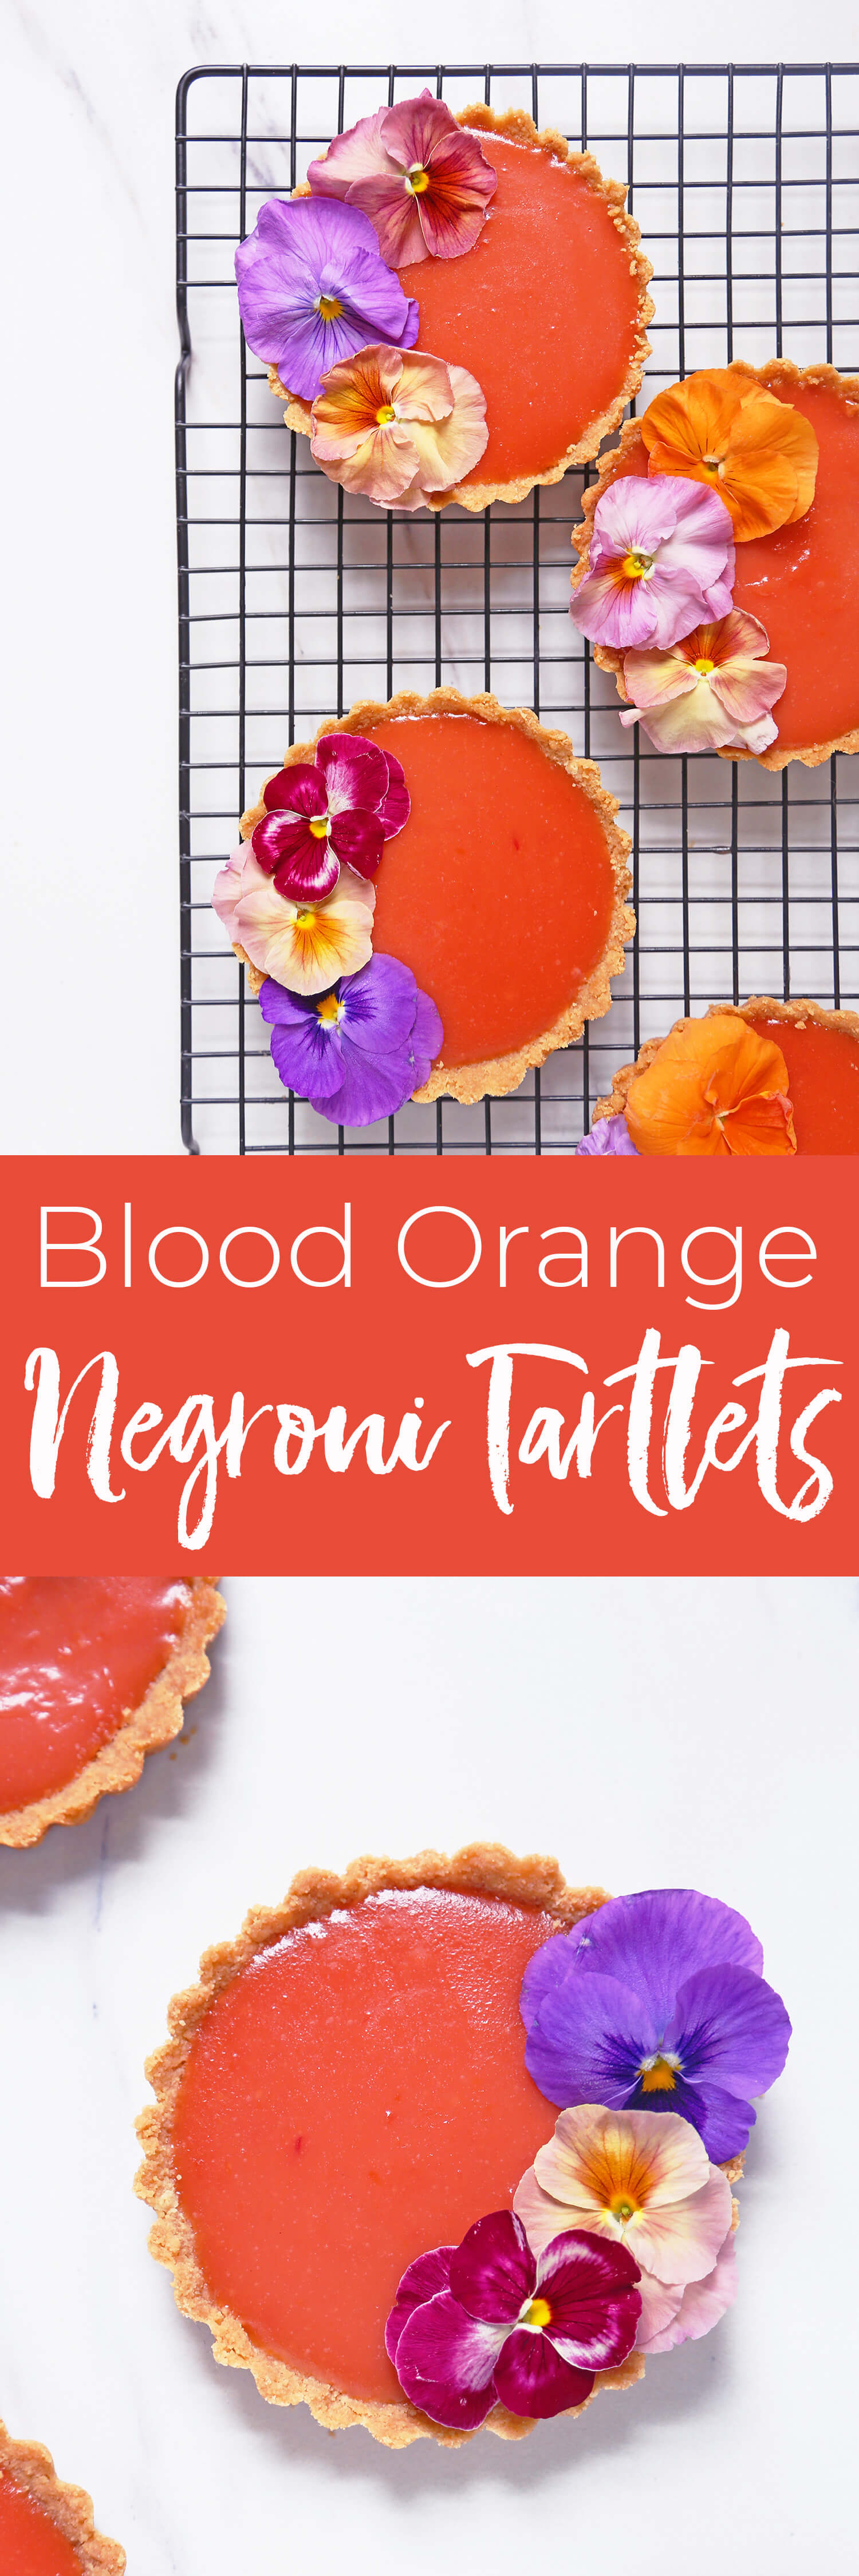 Blood Orange Negroni Tartlets